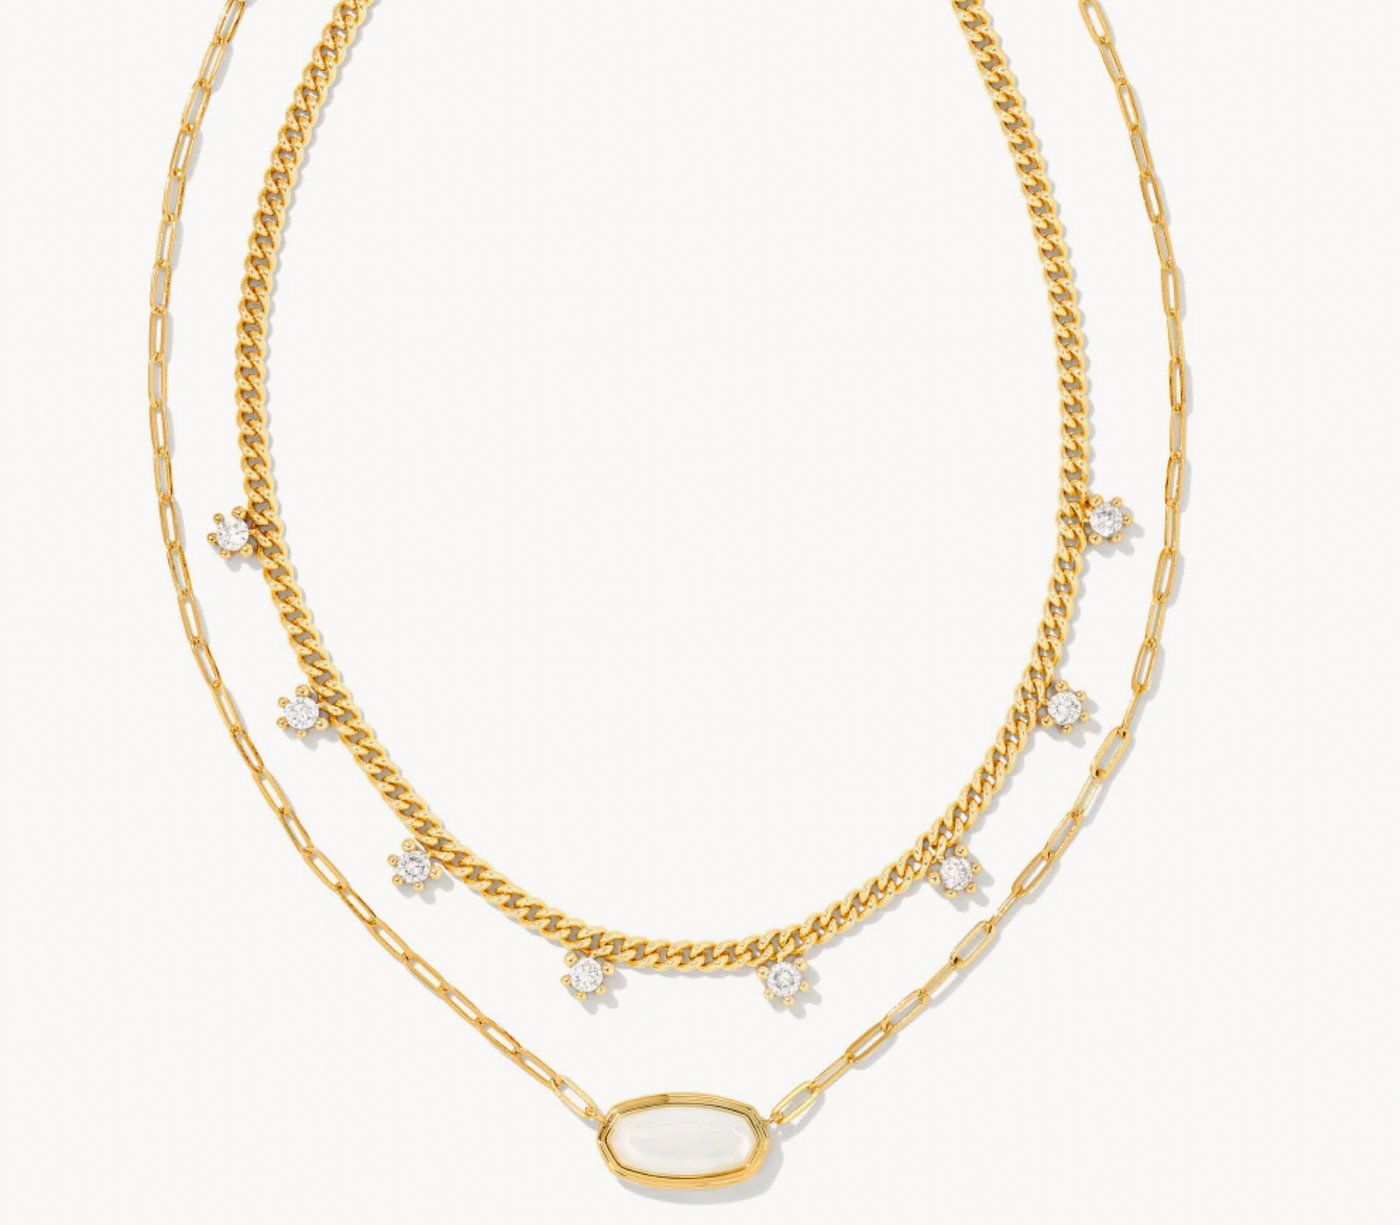 Kendra Scott Framed Elisa Gold Multi Strand Necklace in Iridescent Opalite Illusion